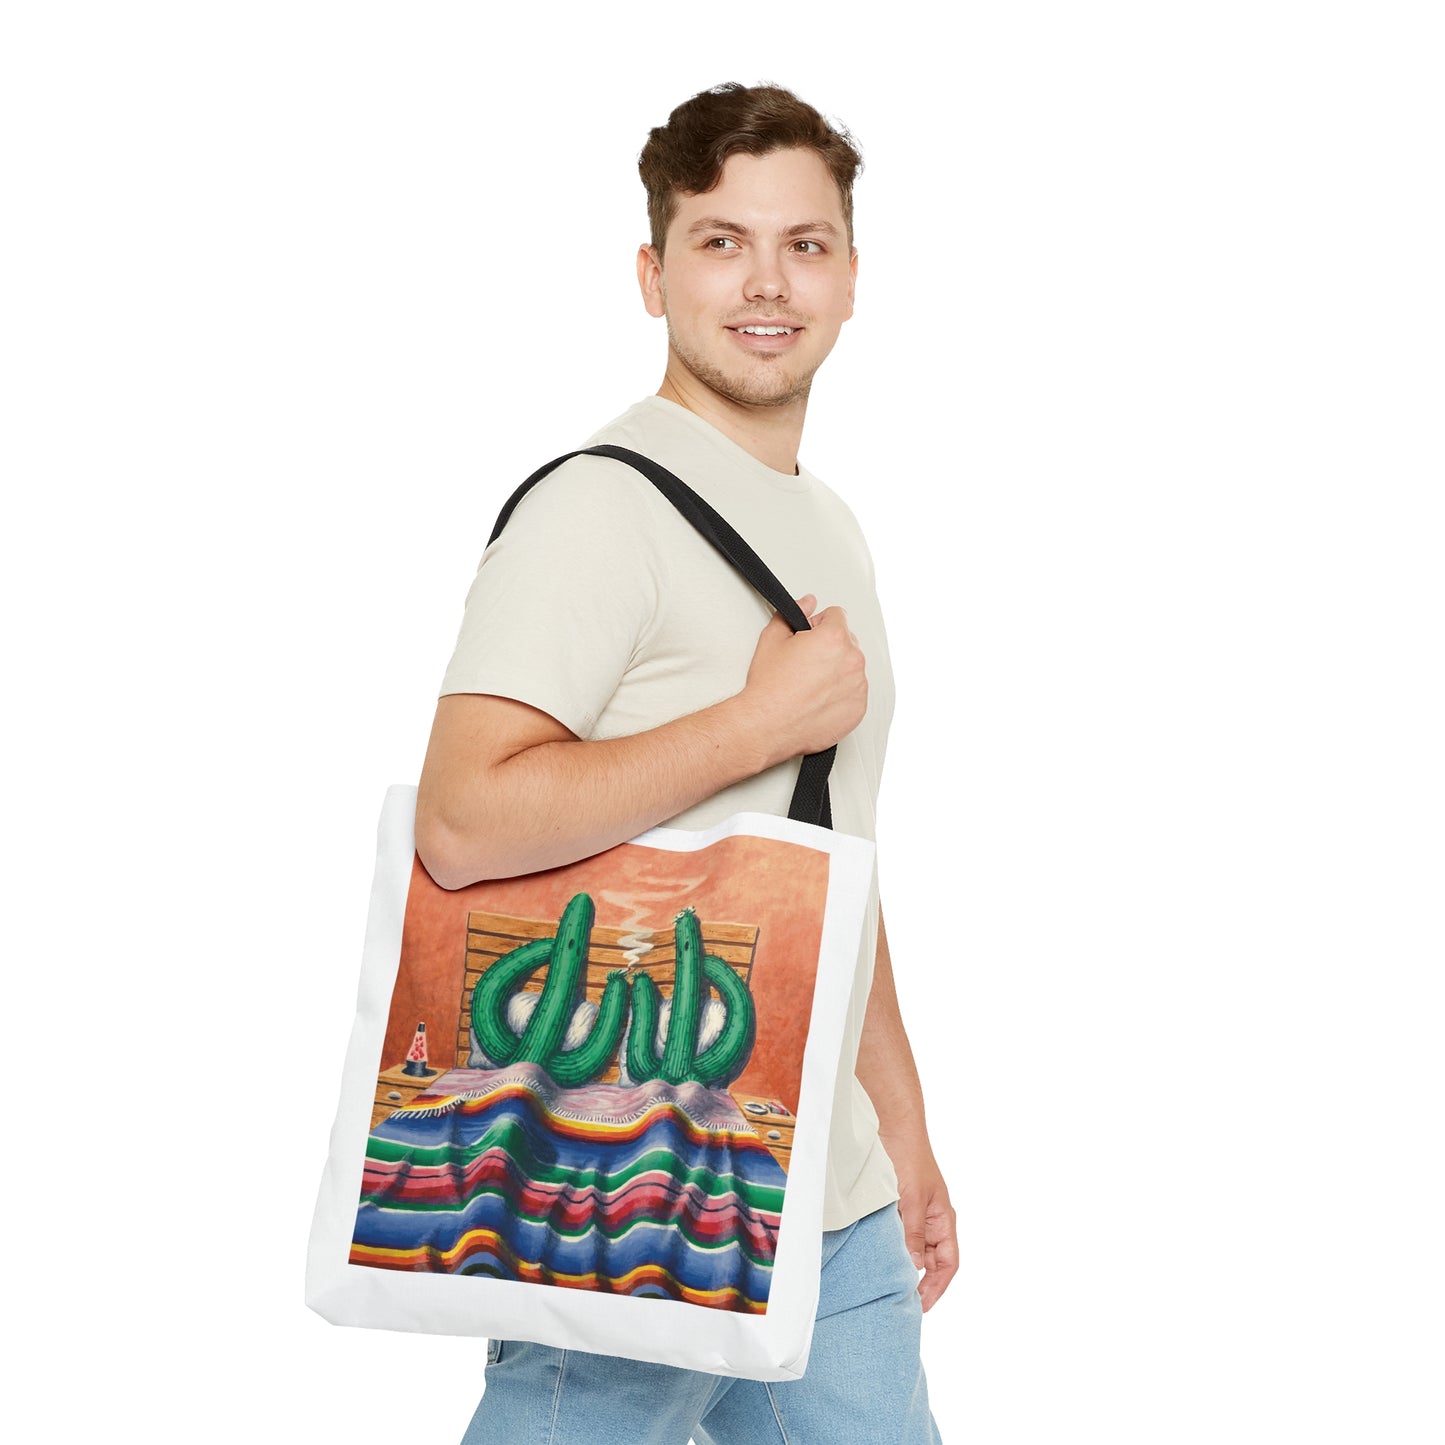 Arizona is for Saguaro Lovers - Tote Bag